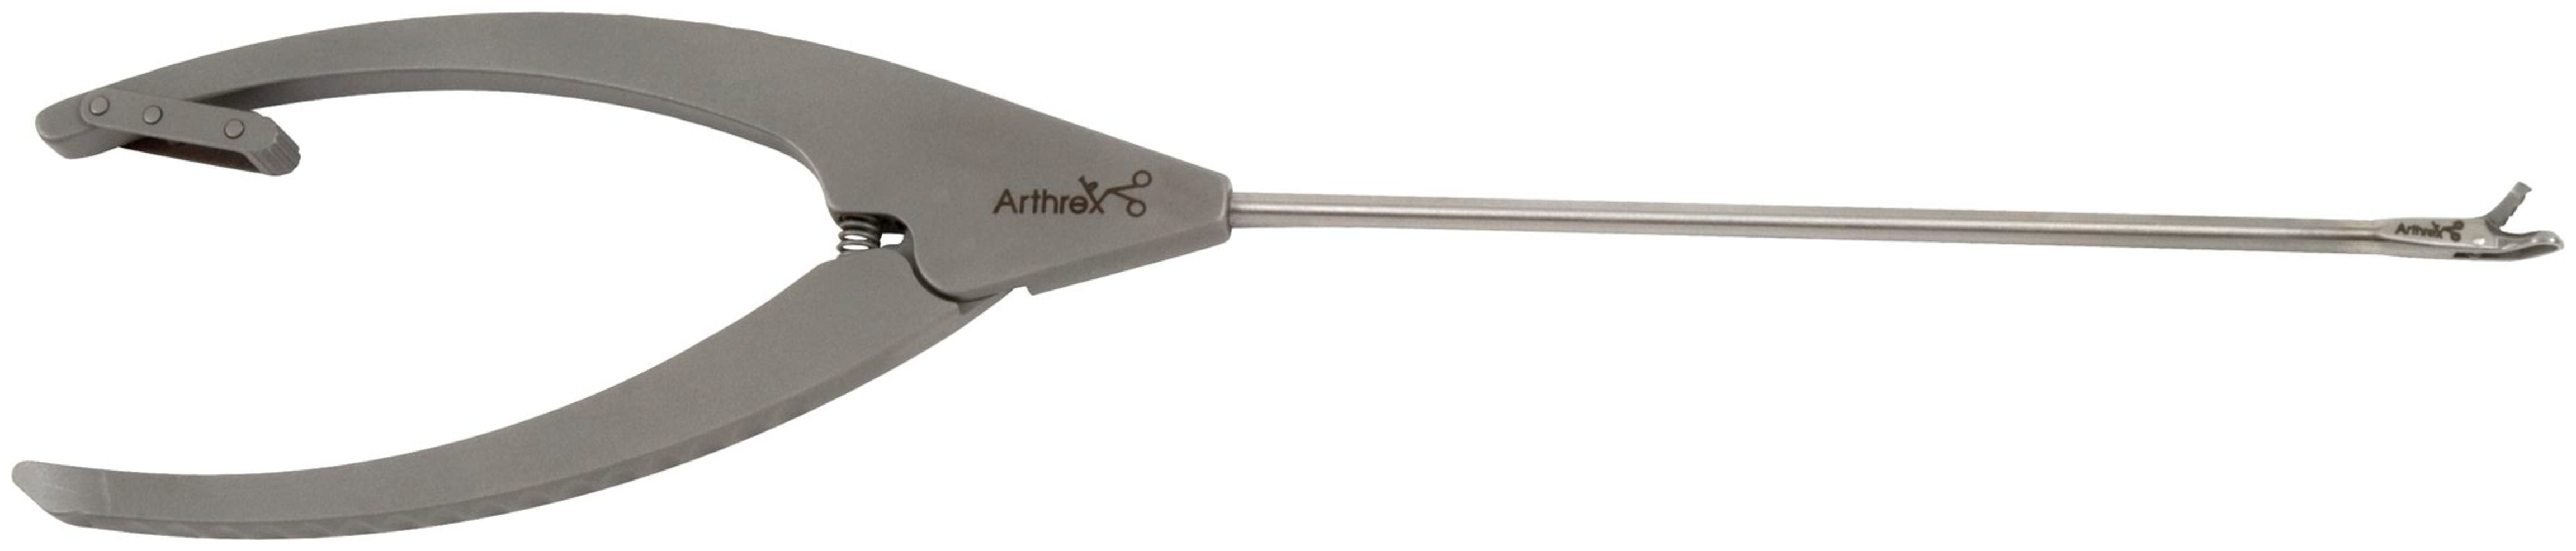 WishBone Medium Punch, Ø 3.4 mm, Schaft gerade, Maul 45° rechts gebogen